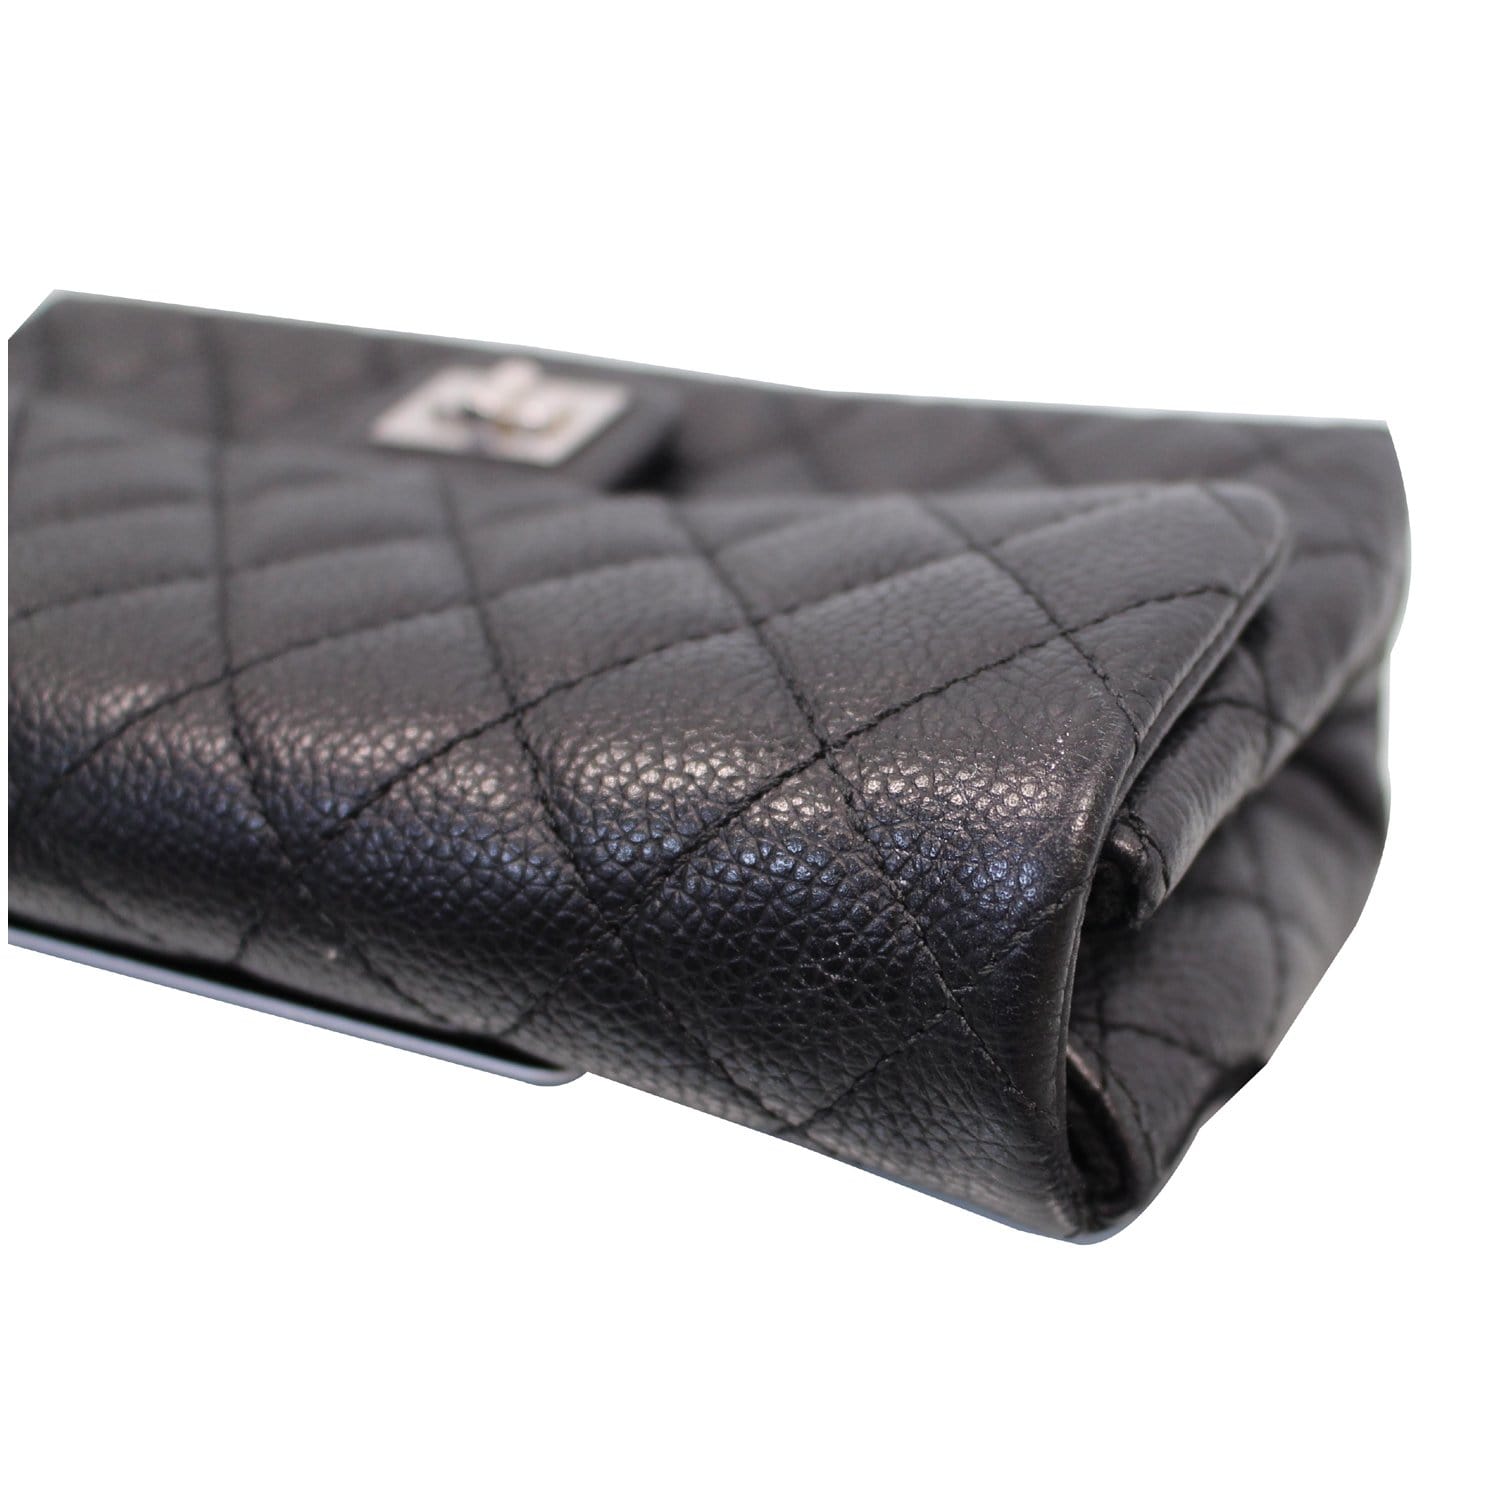 Chanel 2018 Reissue 2.55 Waist Bag - Black Waist Bags, Handbags - CHA396439